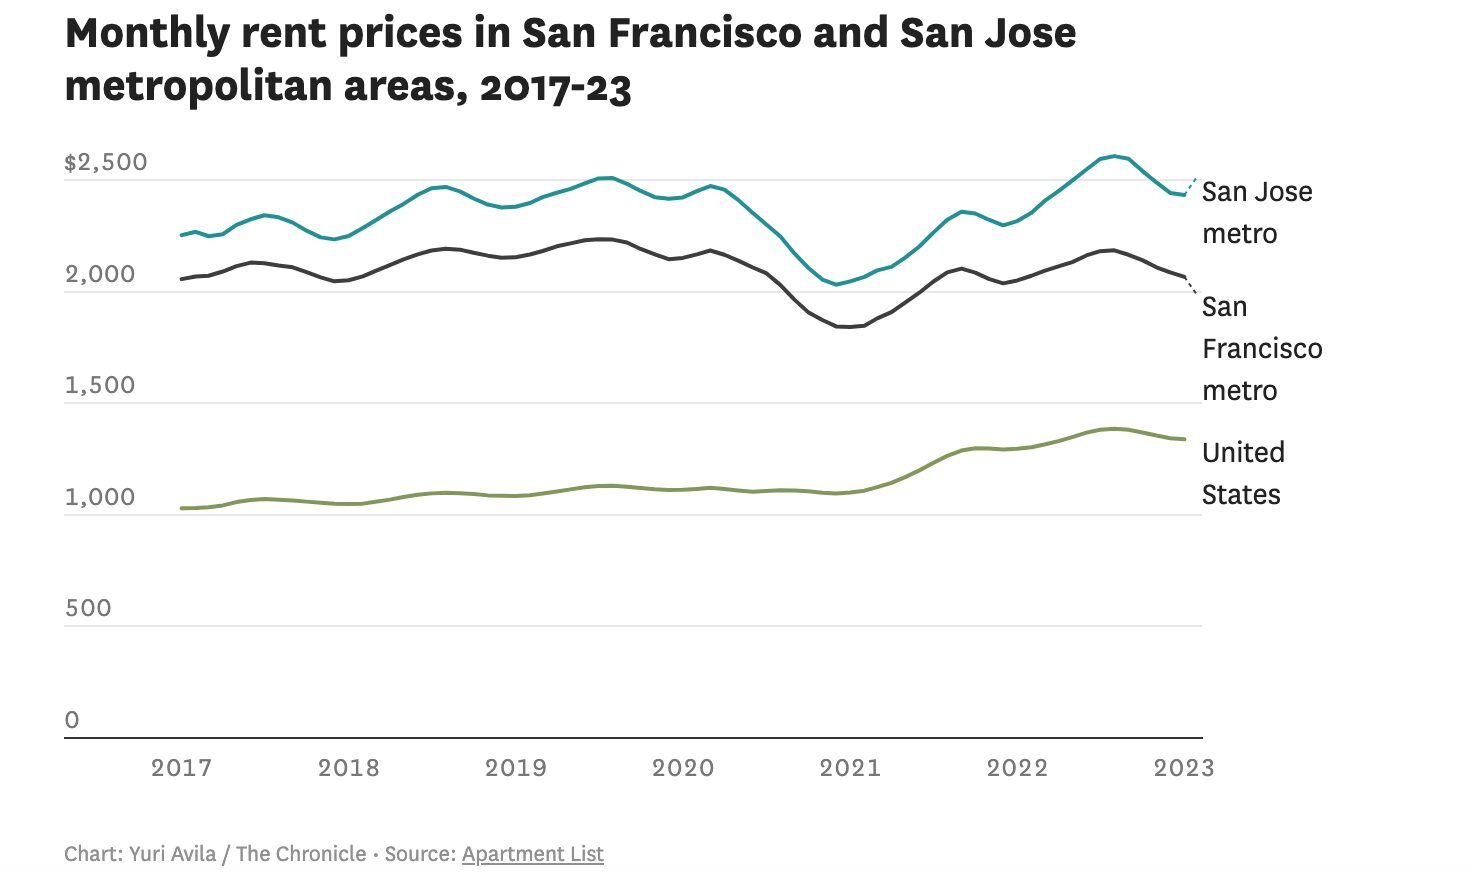 Bay Area Median Rent Price Shows Slight Decrease